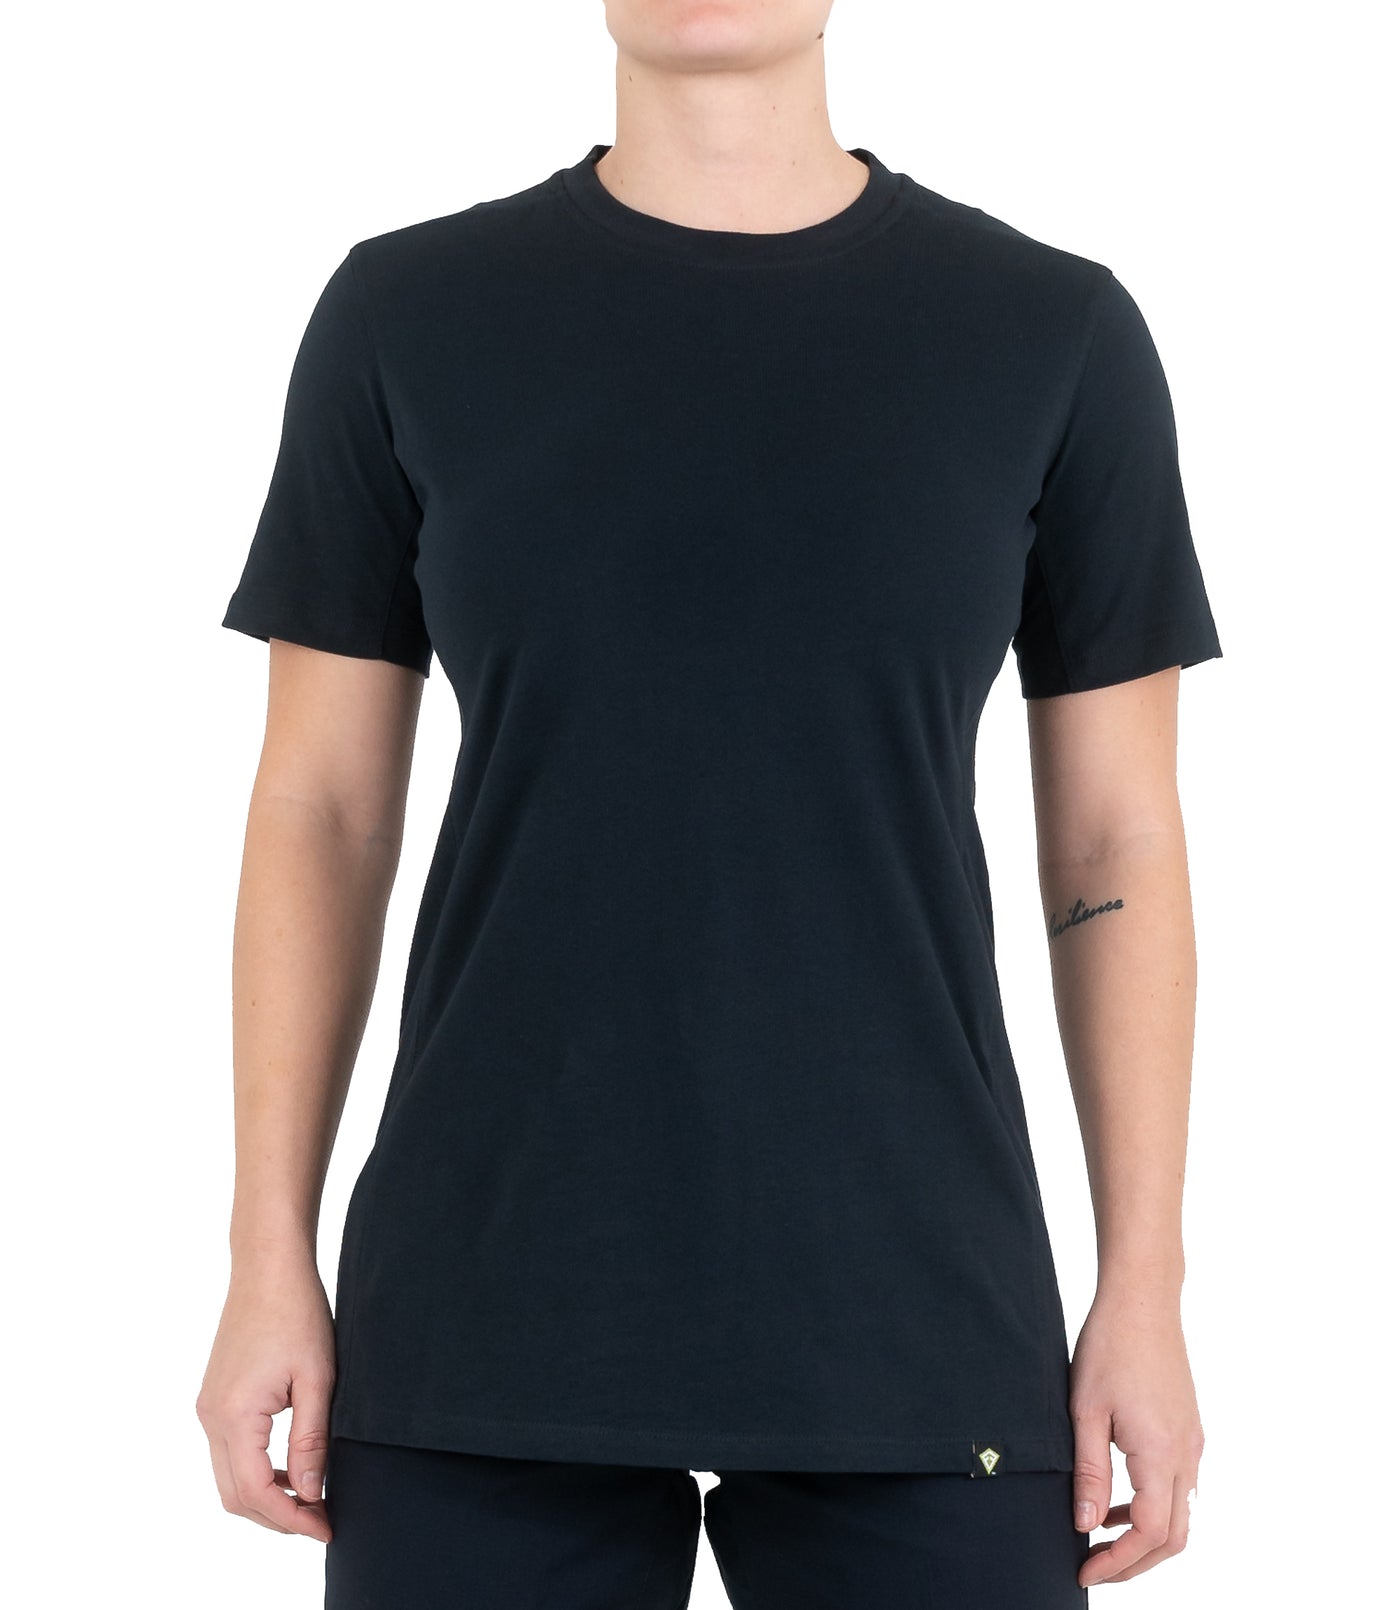 Untucked Front of Women's Tactix Series Cotton Short Sleeve T-Shirt in Midnight Navy